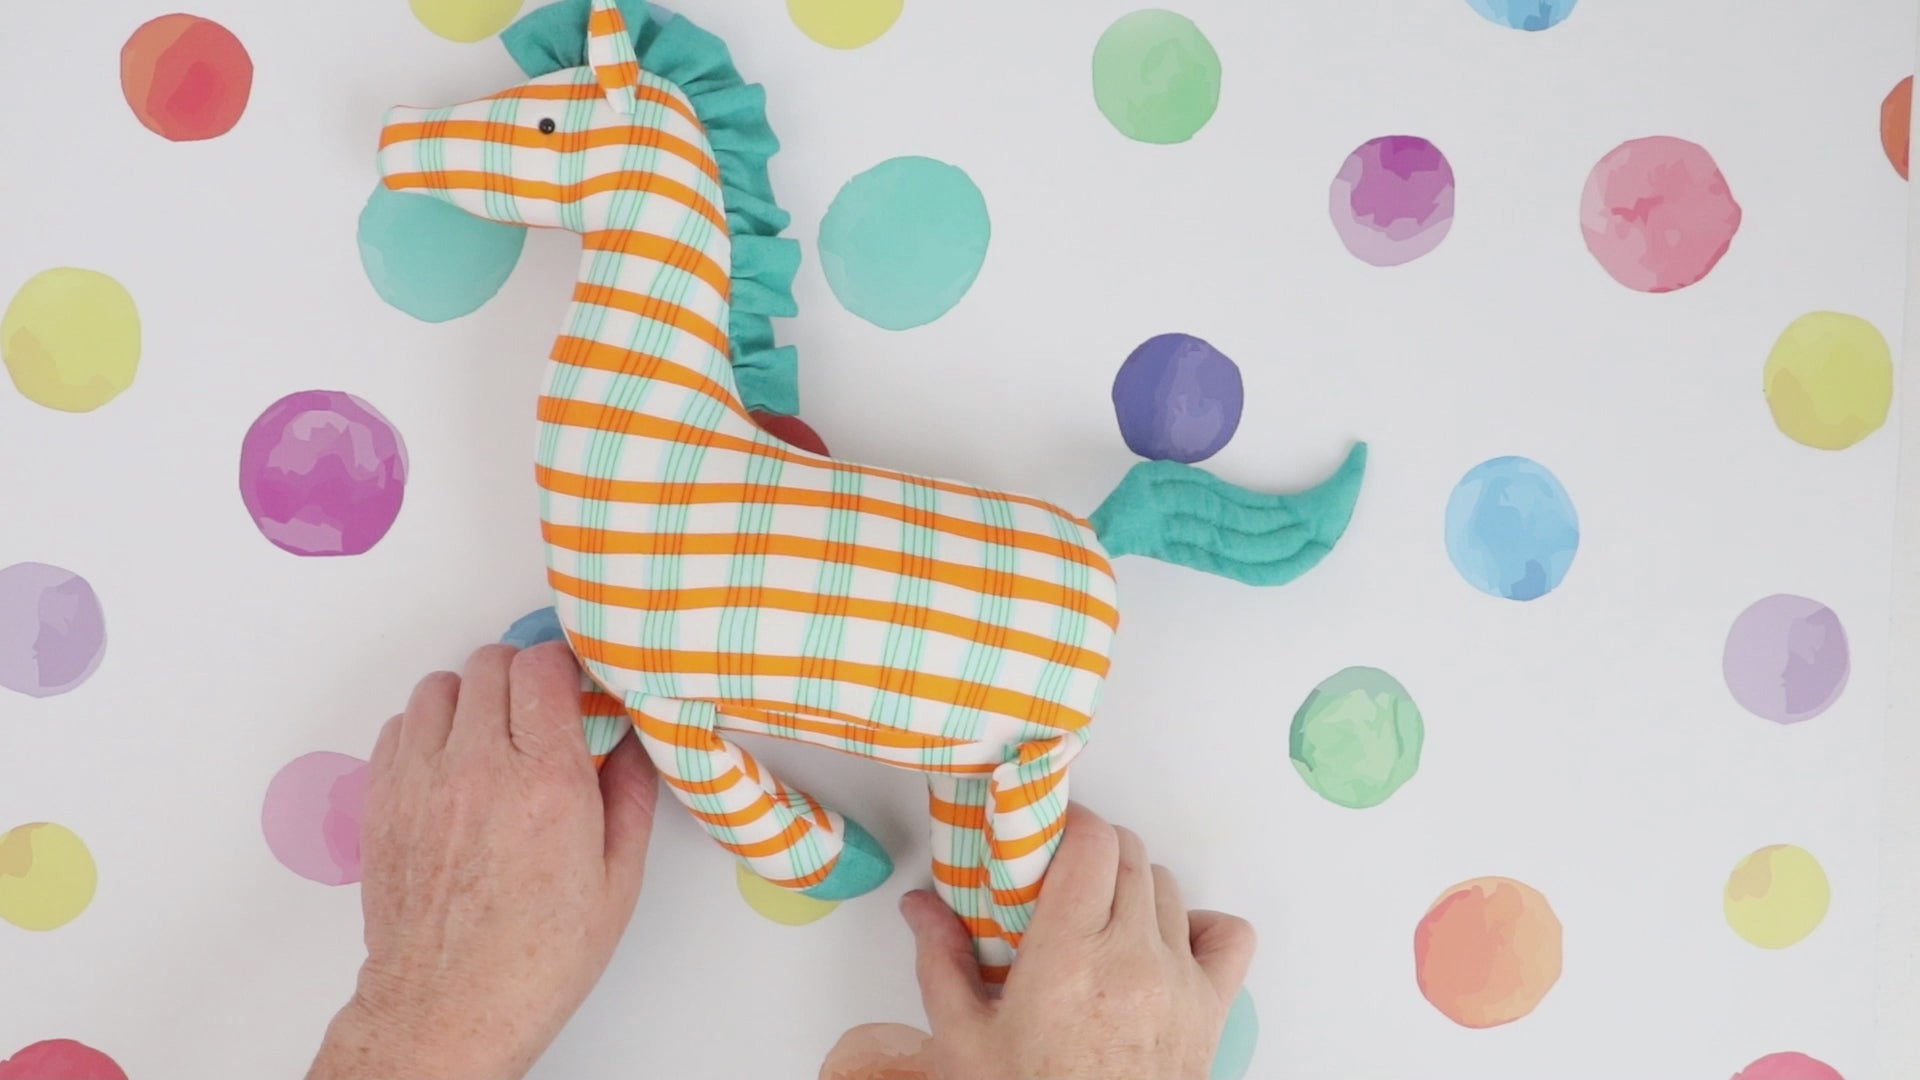 Zorse : Zebra horse sewing pattern, soft toy pattern.